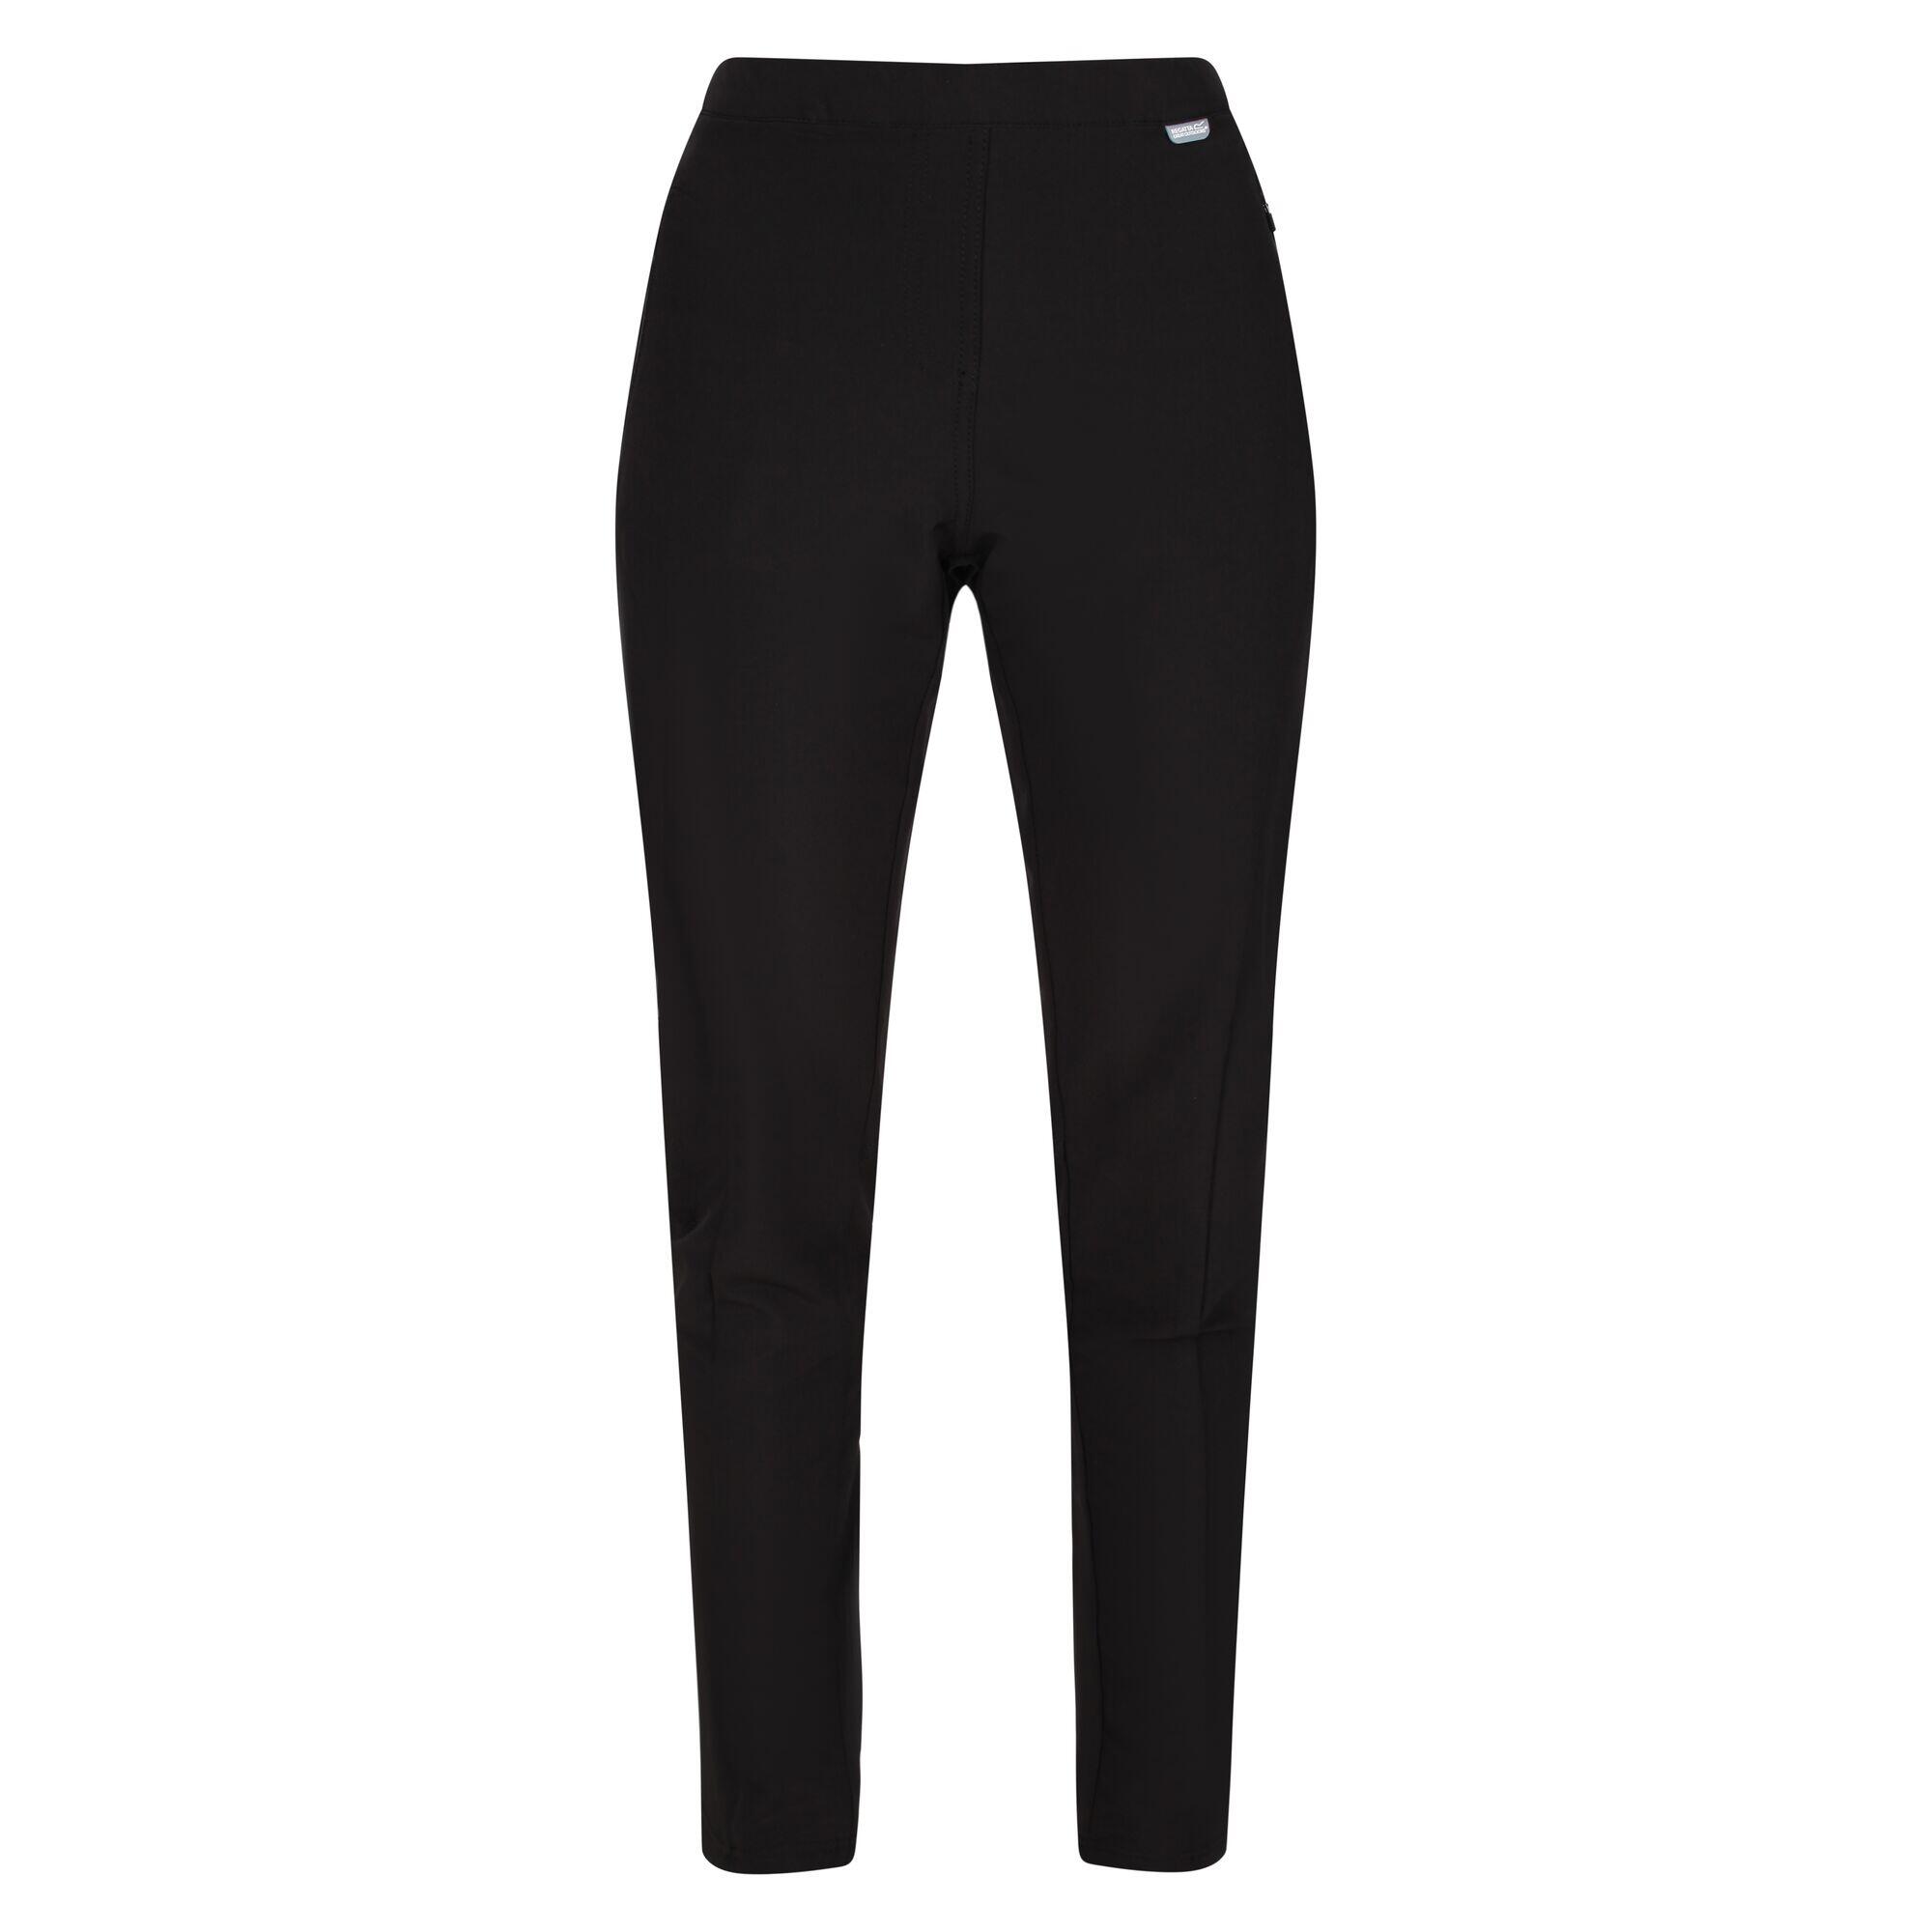 Pentre Stretch Women's Hiking Trousers - Black 5/6